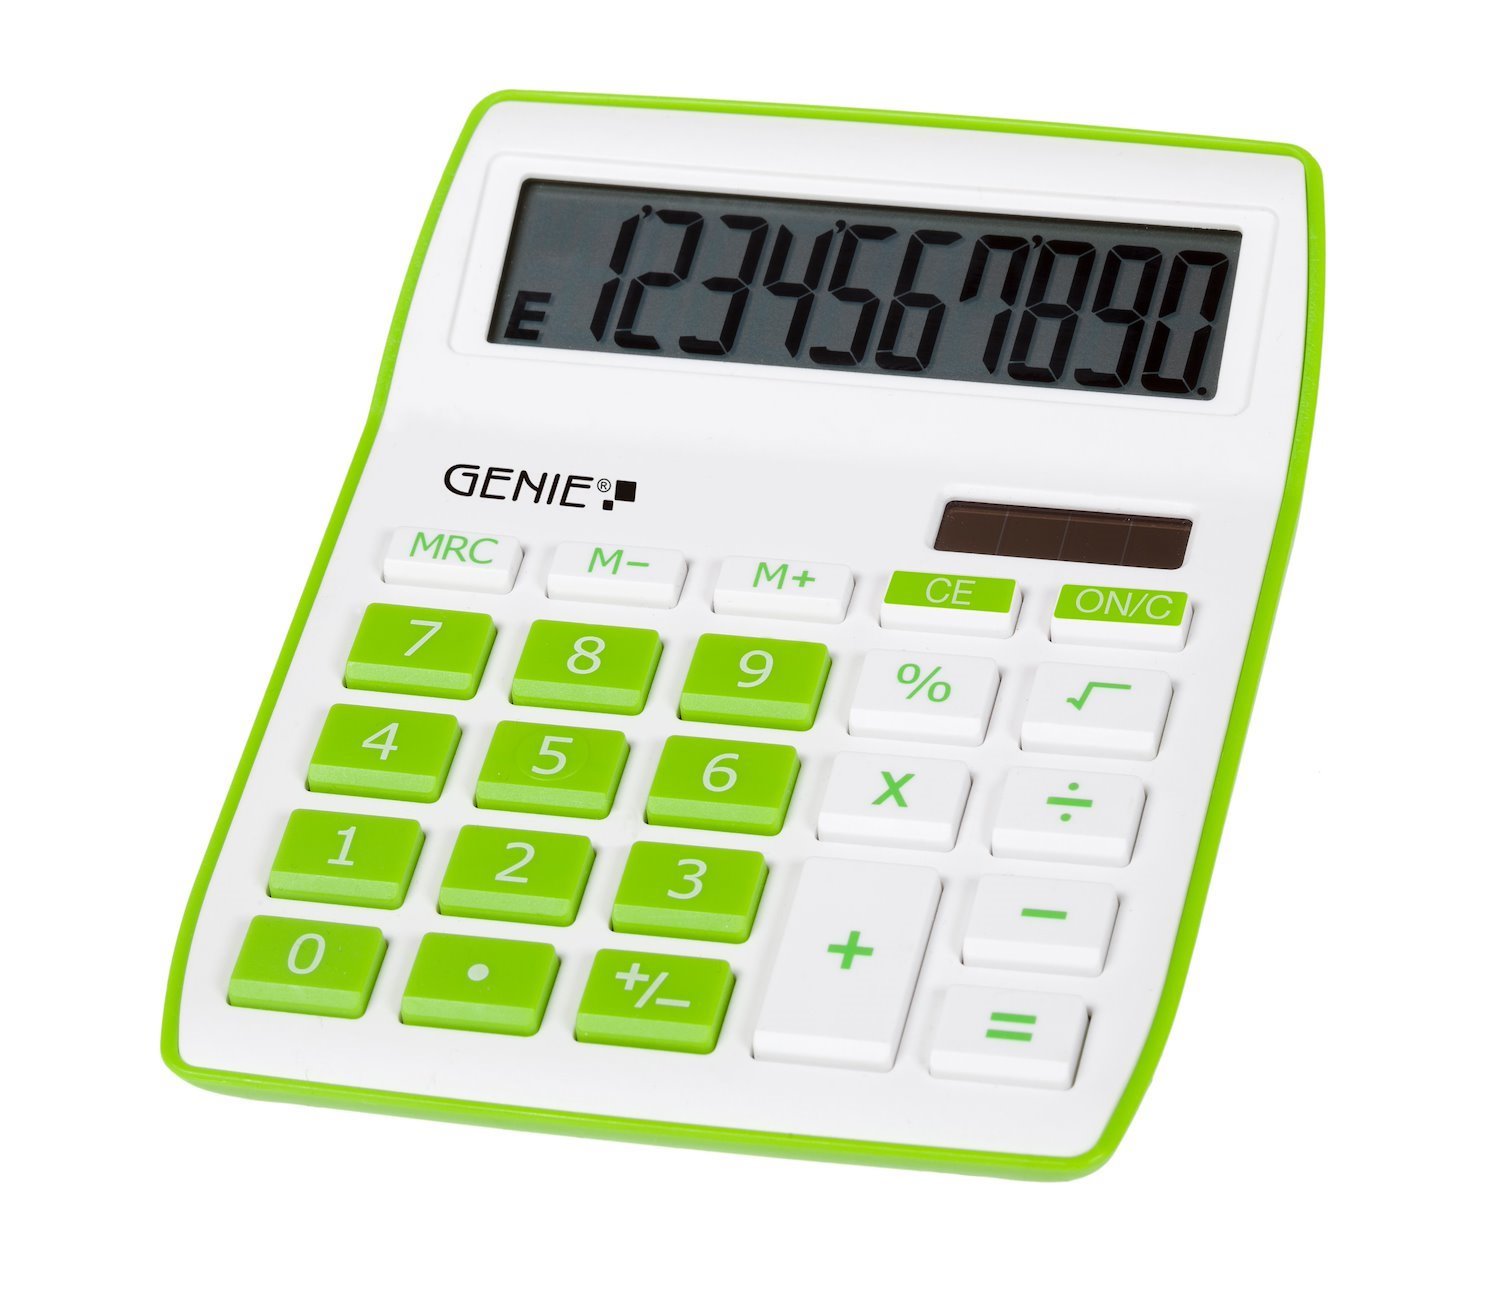 Genius Genie 840 G Calculator Desktop Display Green White (Genie 840G 10 Digit Desktop Calculator Green - 12266)